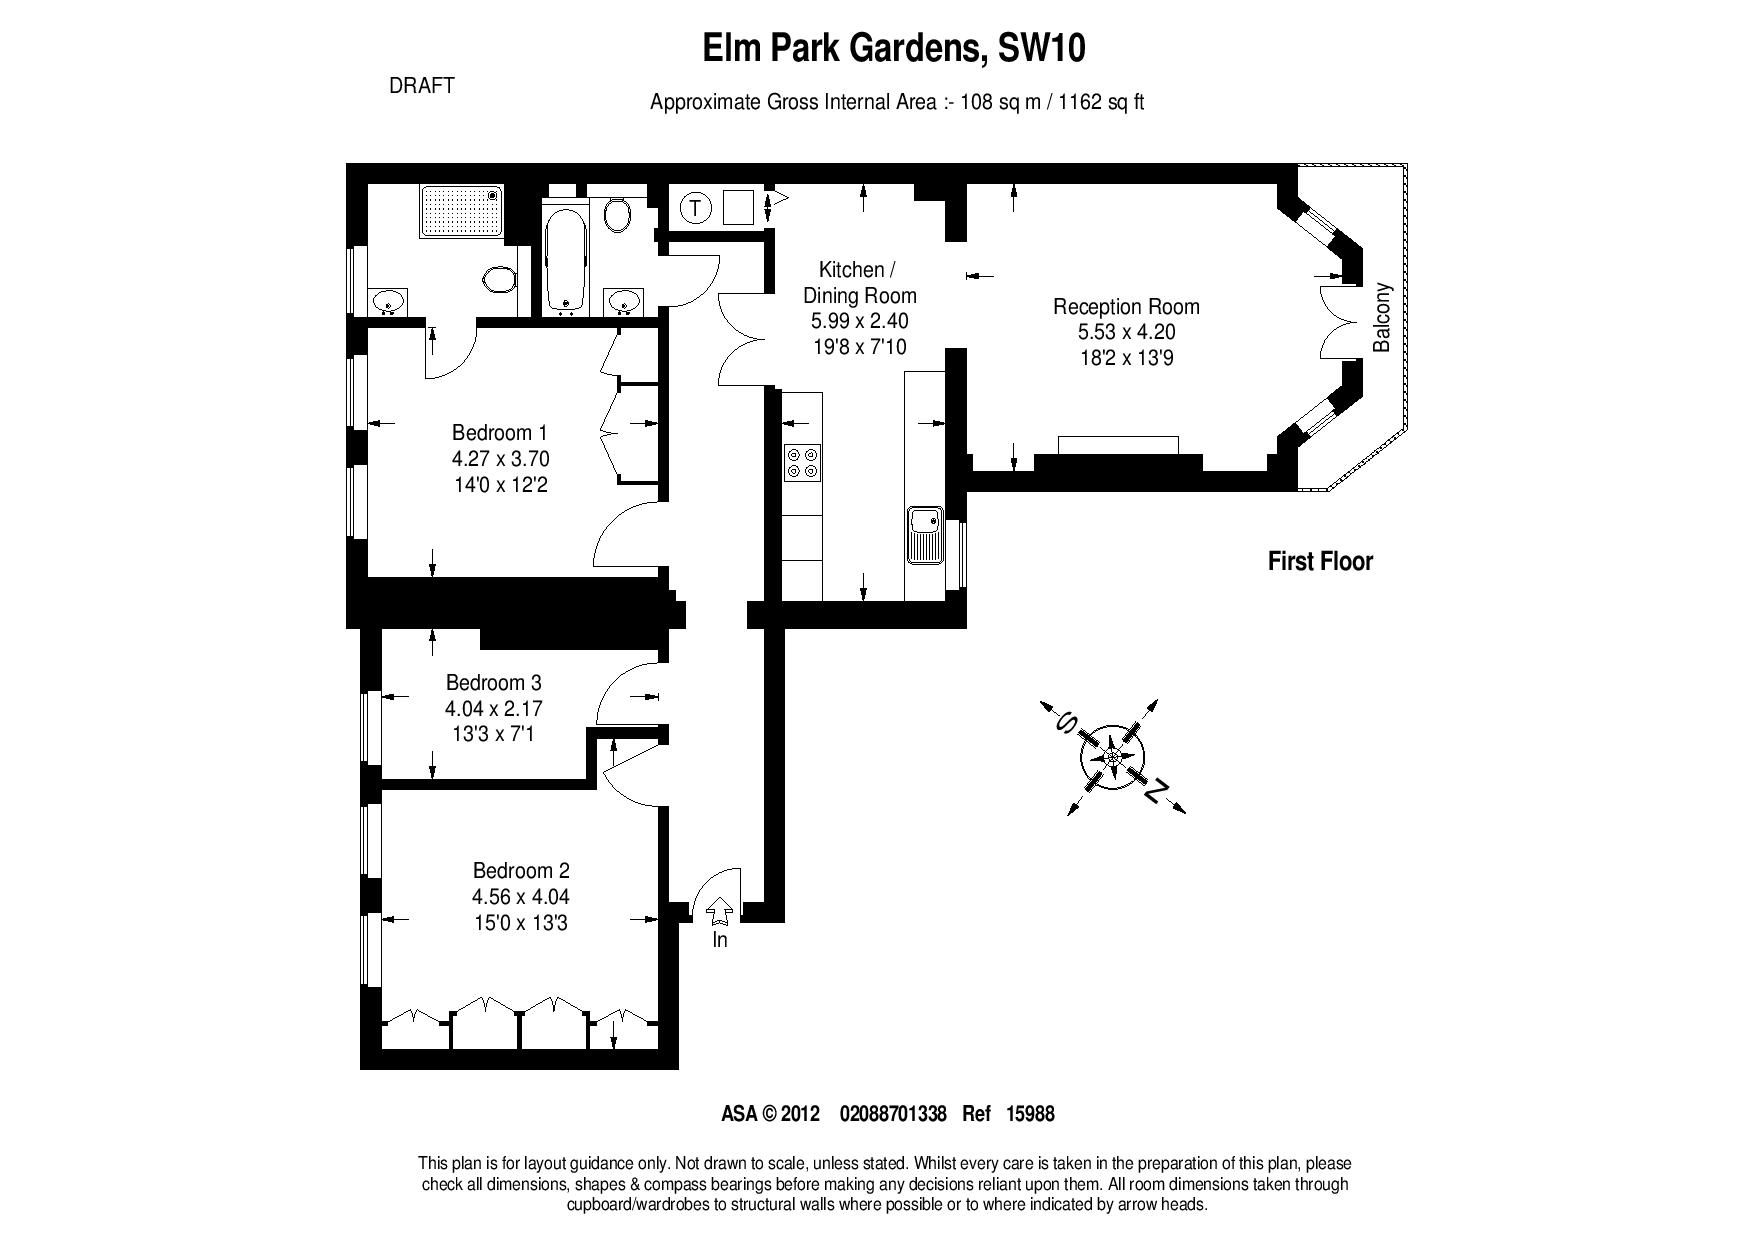 Floorplans For Elm Park Gardens, South Kensington